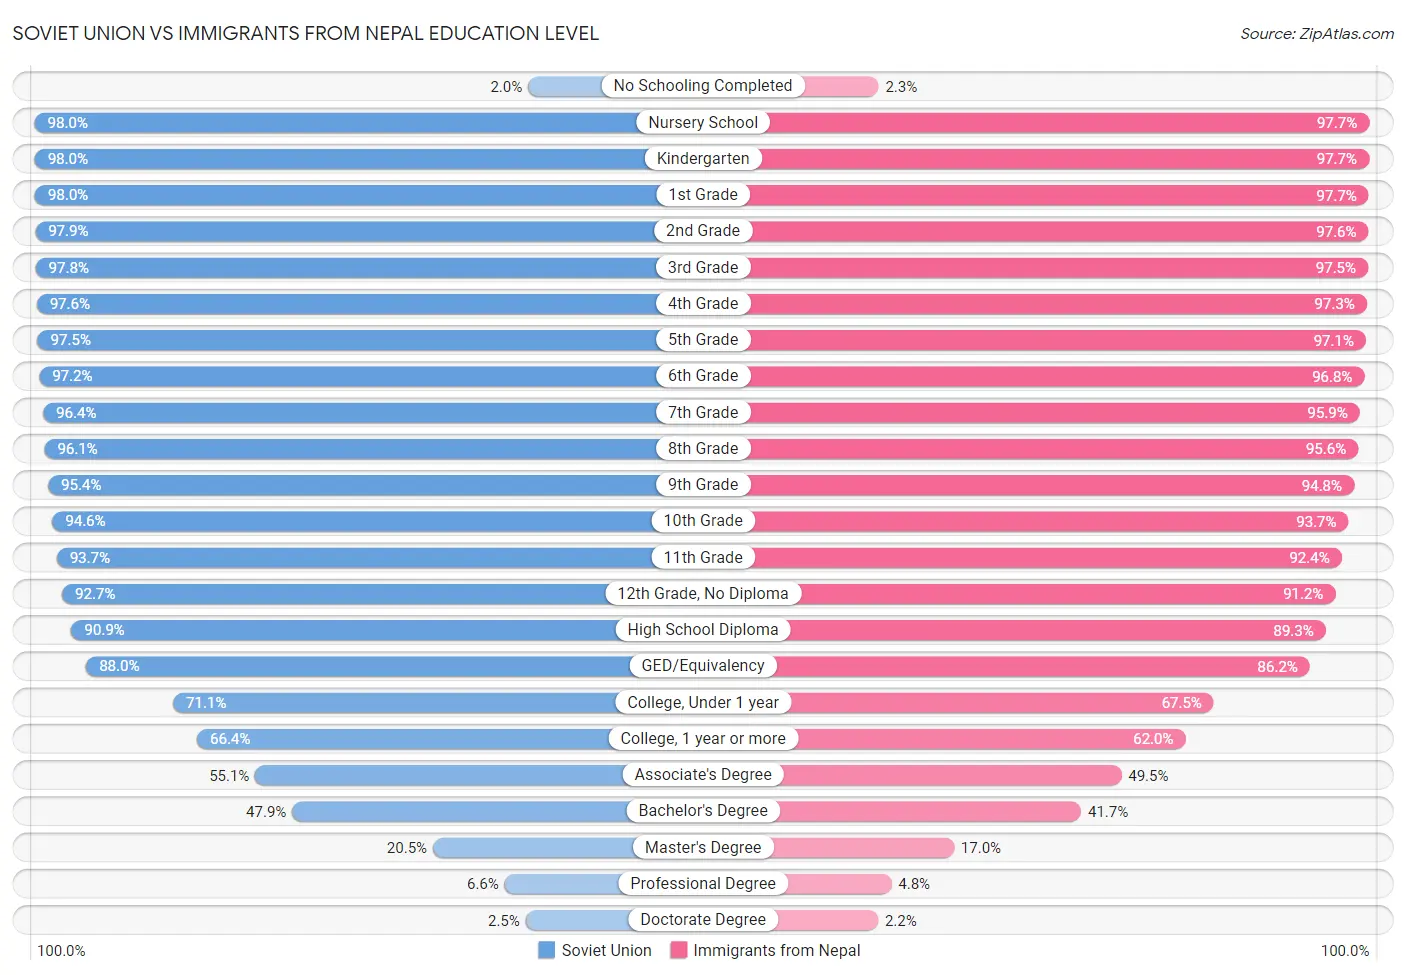 Soviet Union vs Immigrants from Nepal Education Level